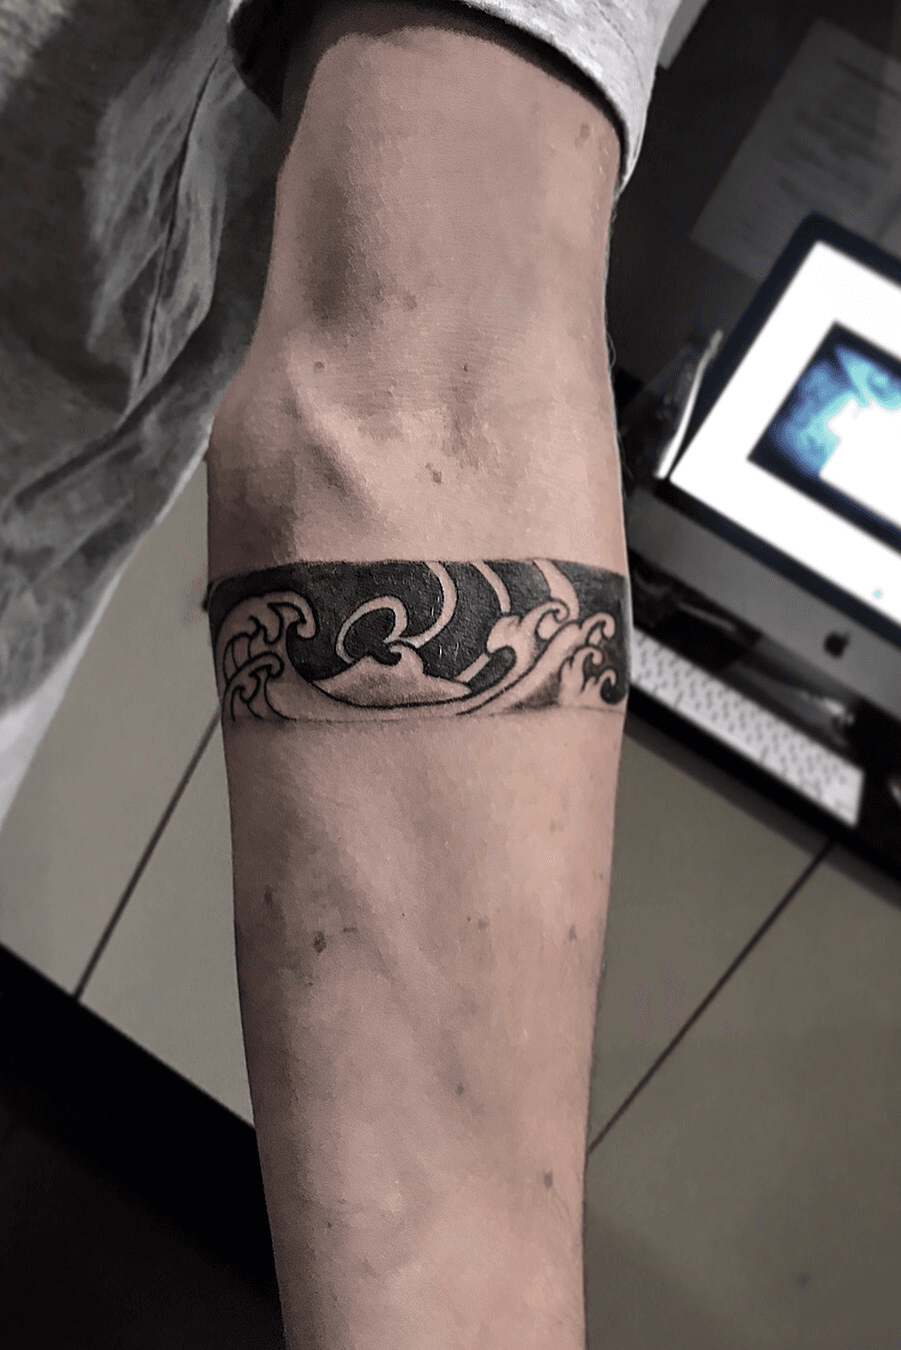 Cherry blossom armband tattoo